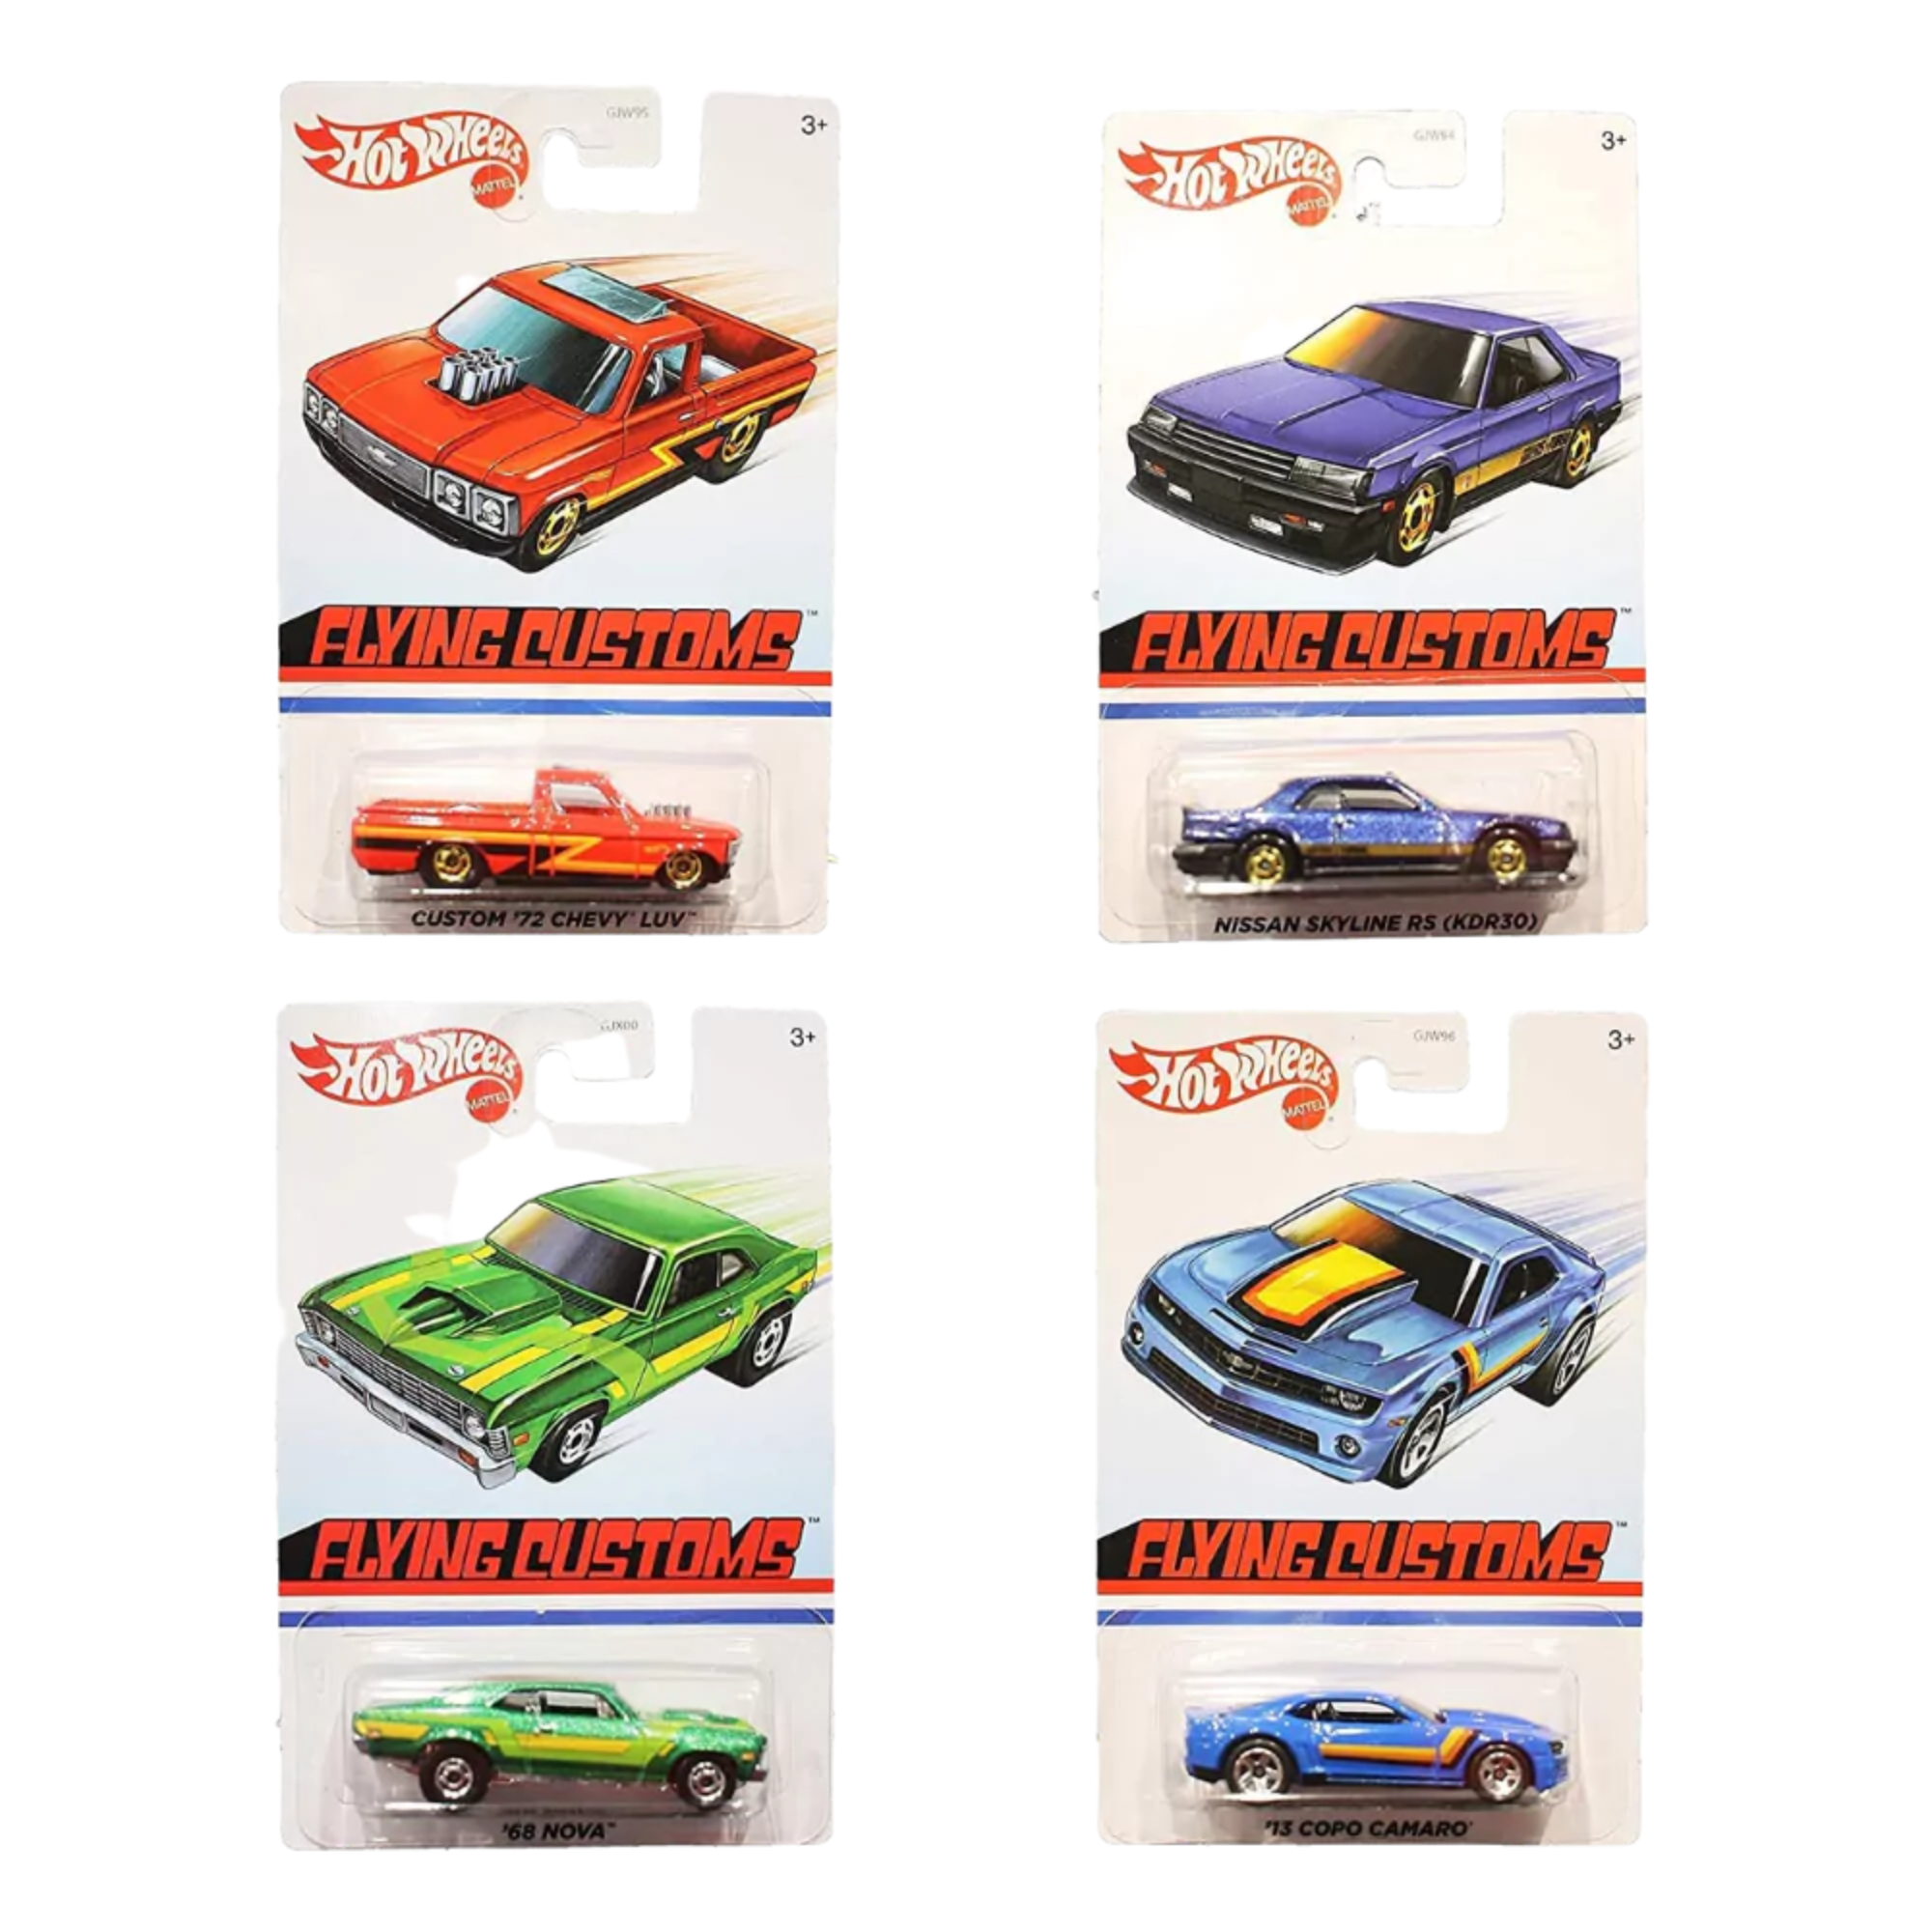 Hot Wheels Flying Customs Set of 4 - Nissan Skyline RS, 13 Copo Camaro, 68 Nova & Custom 72 Chevy Luv - Toptoys2u